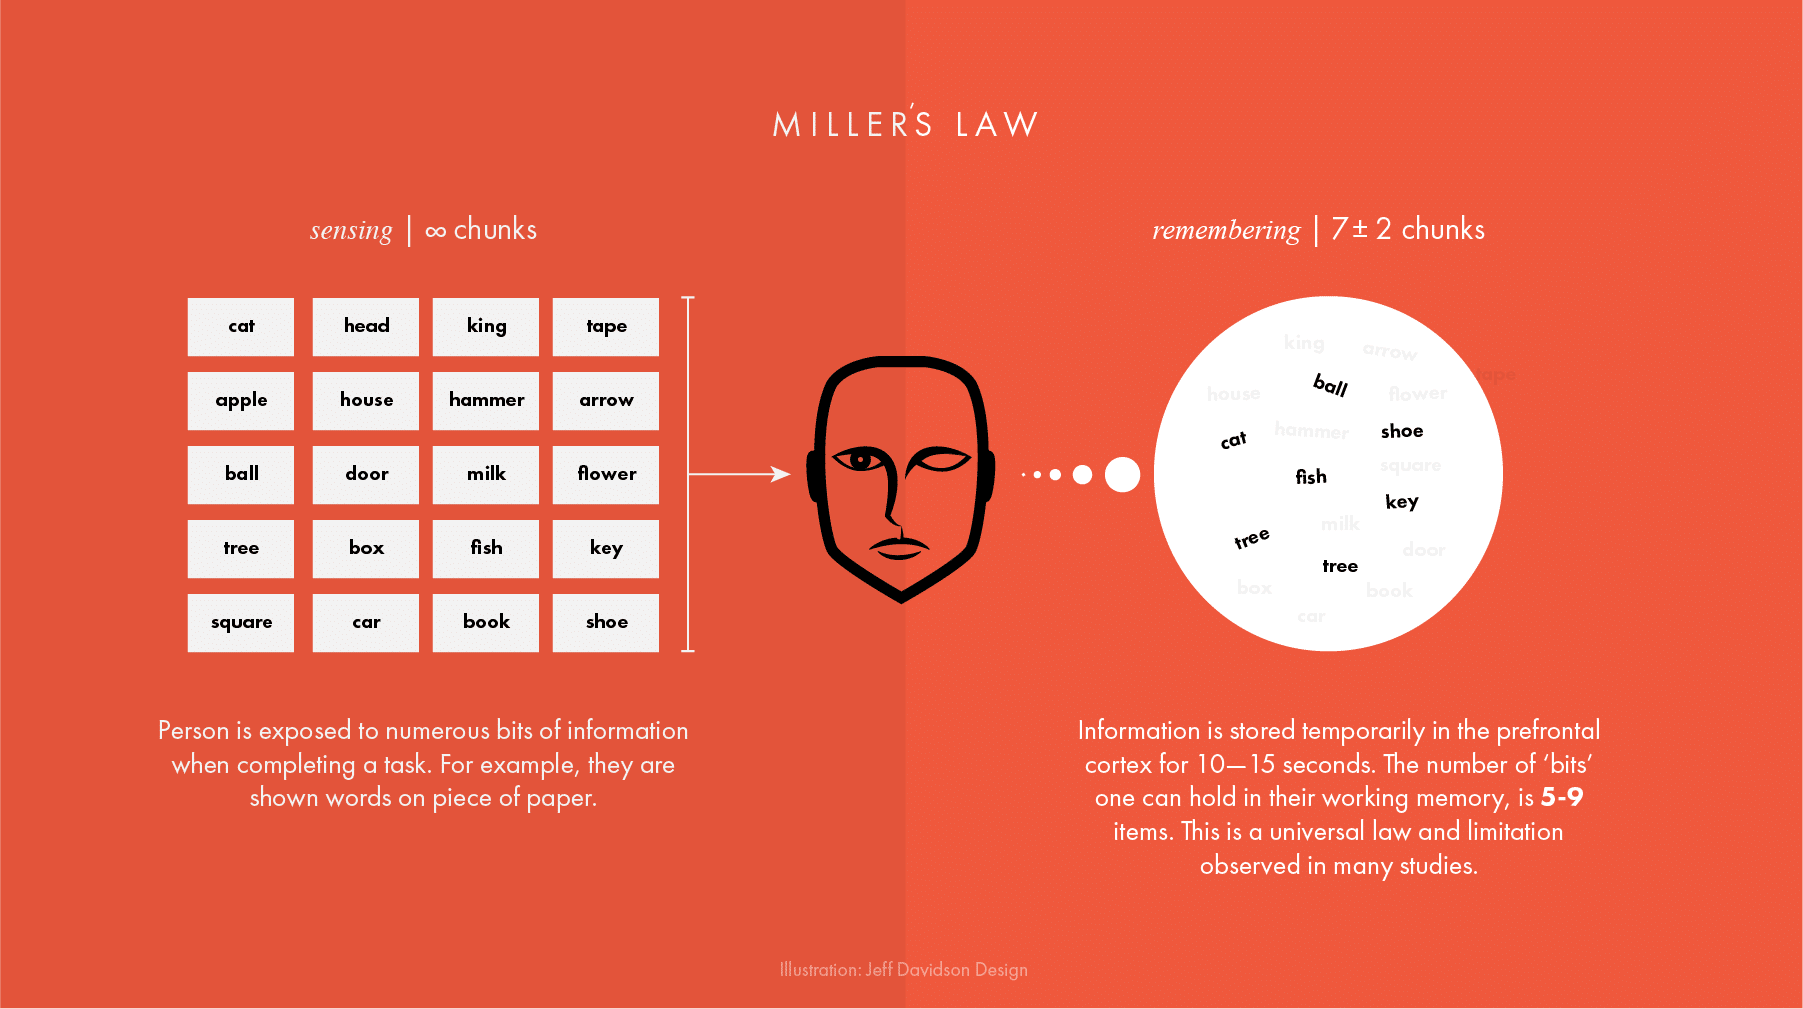 Miller's Law